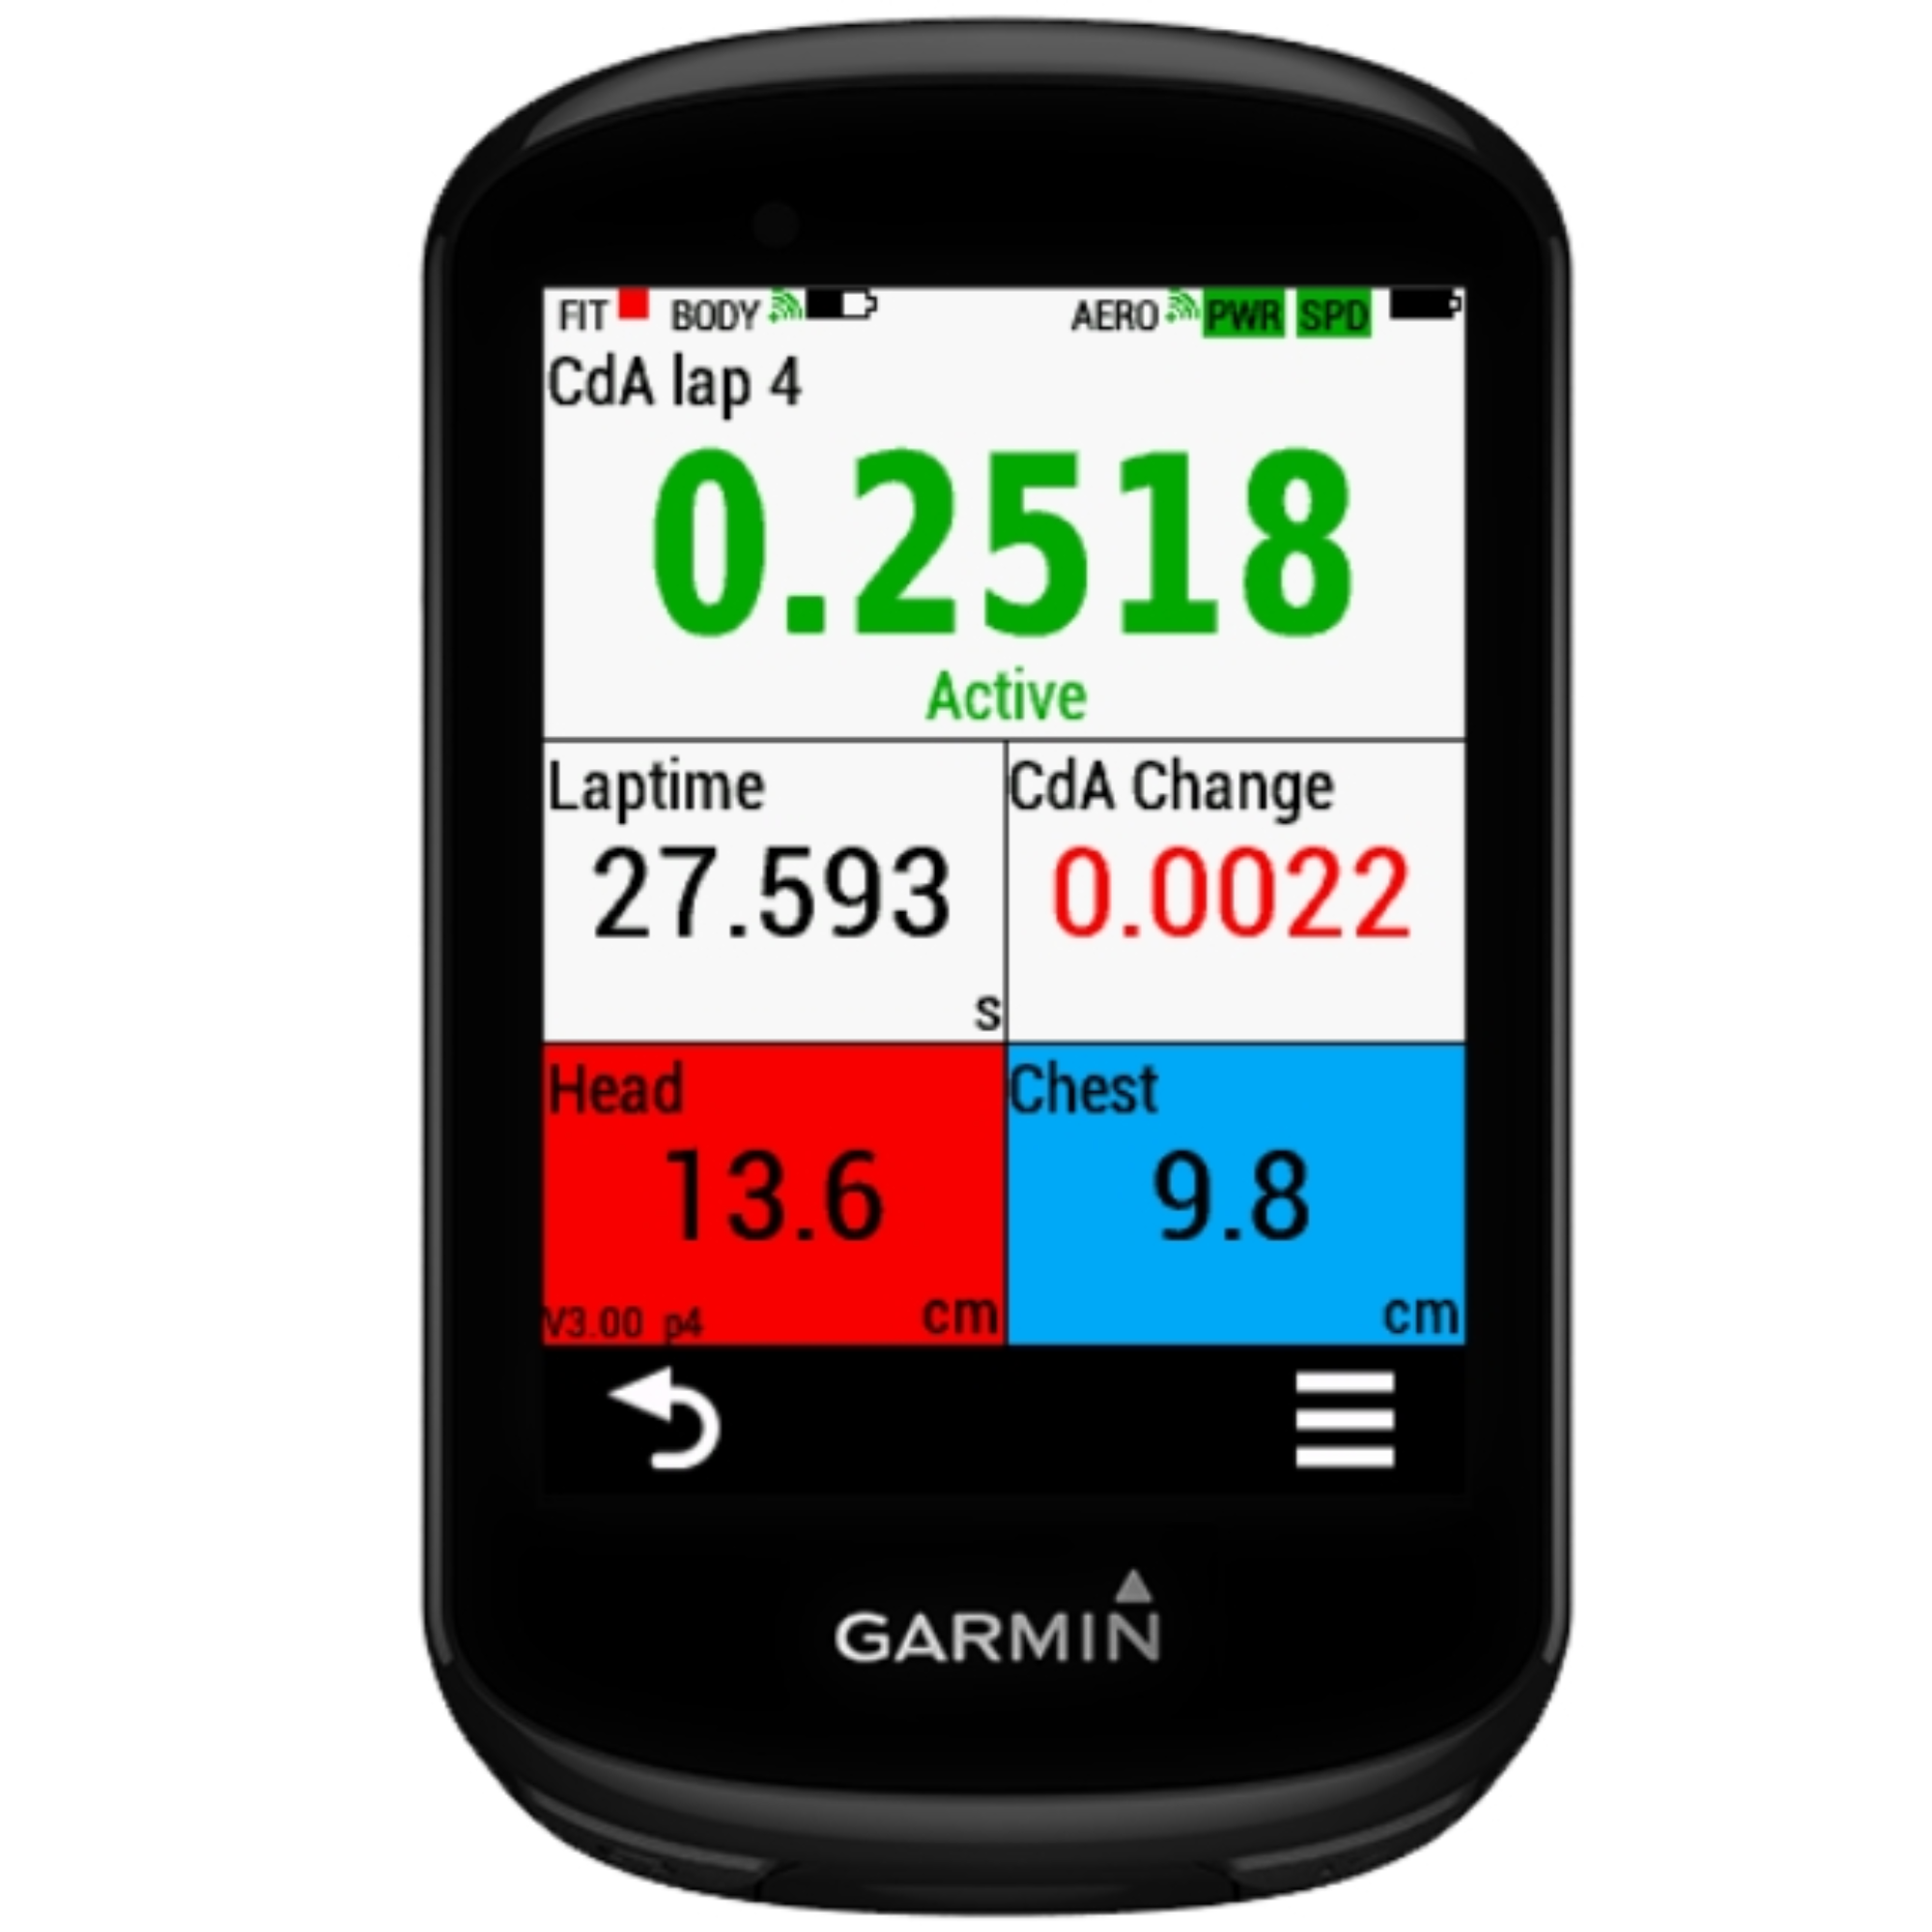 garmin aerosensor app showing aerobody body position sensor data